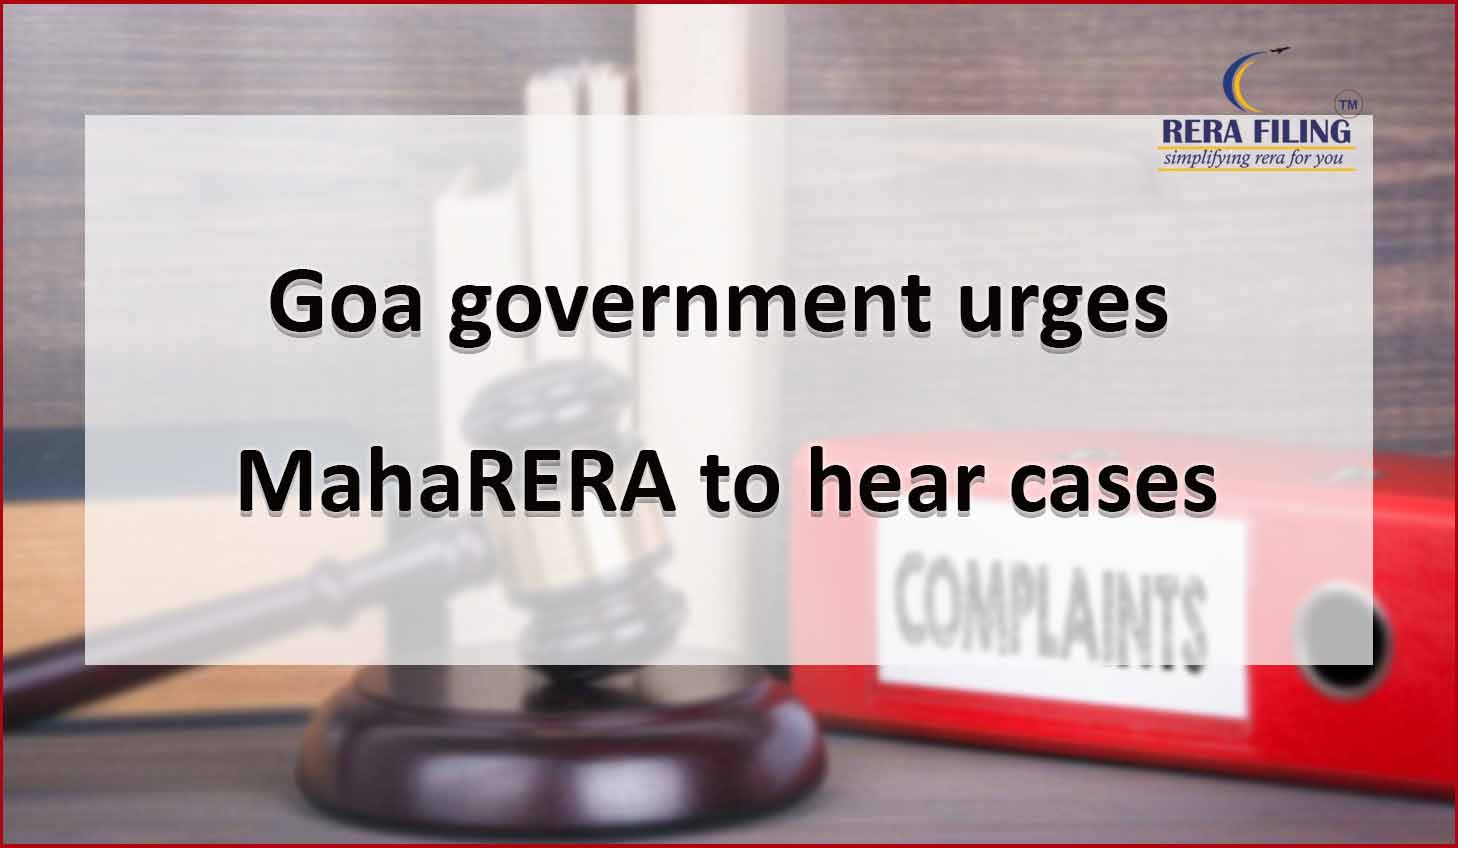   Goa government urges MahaRERA to hear cases